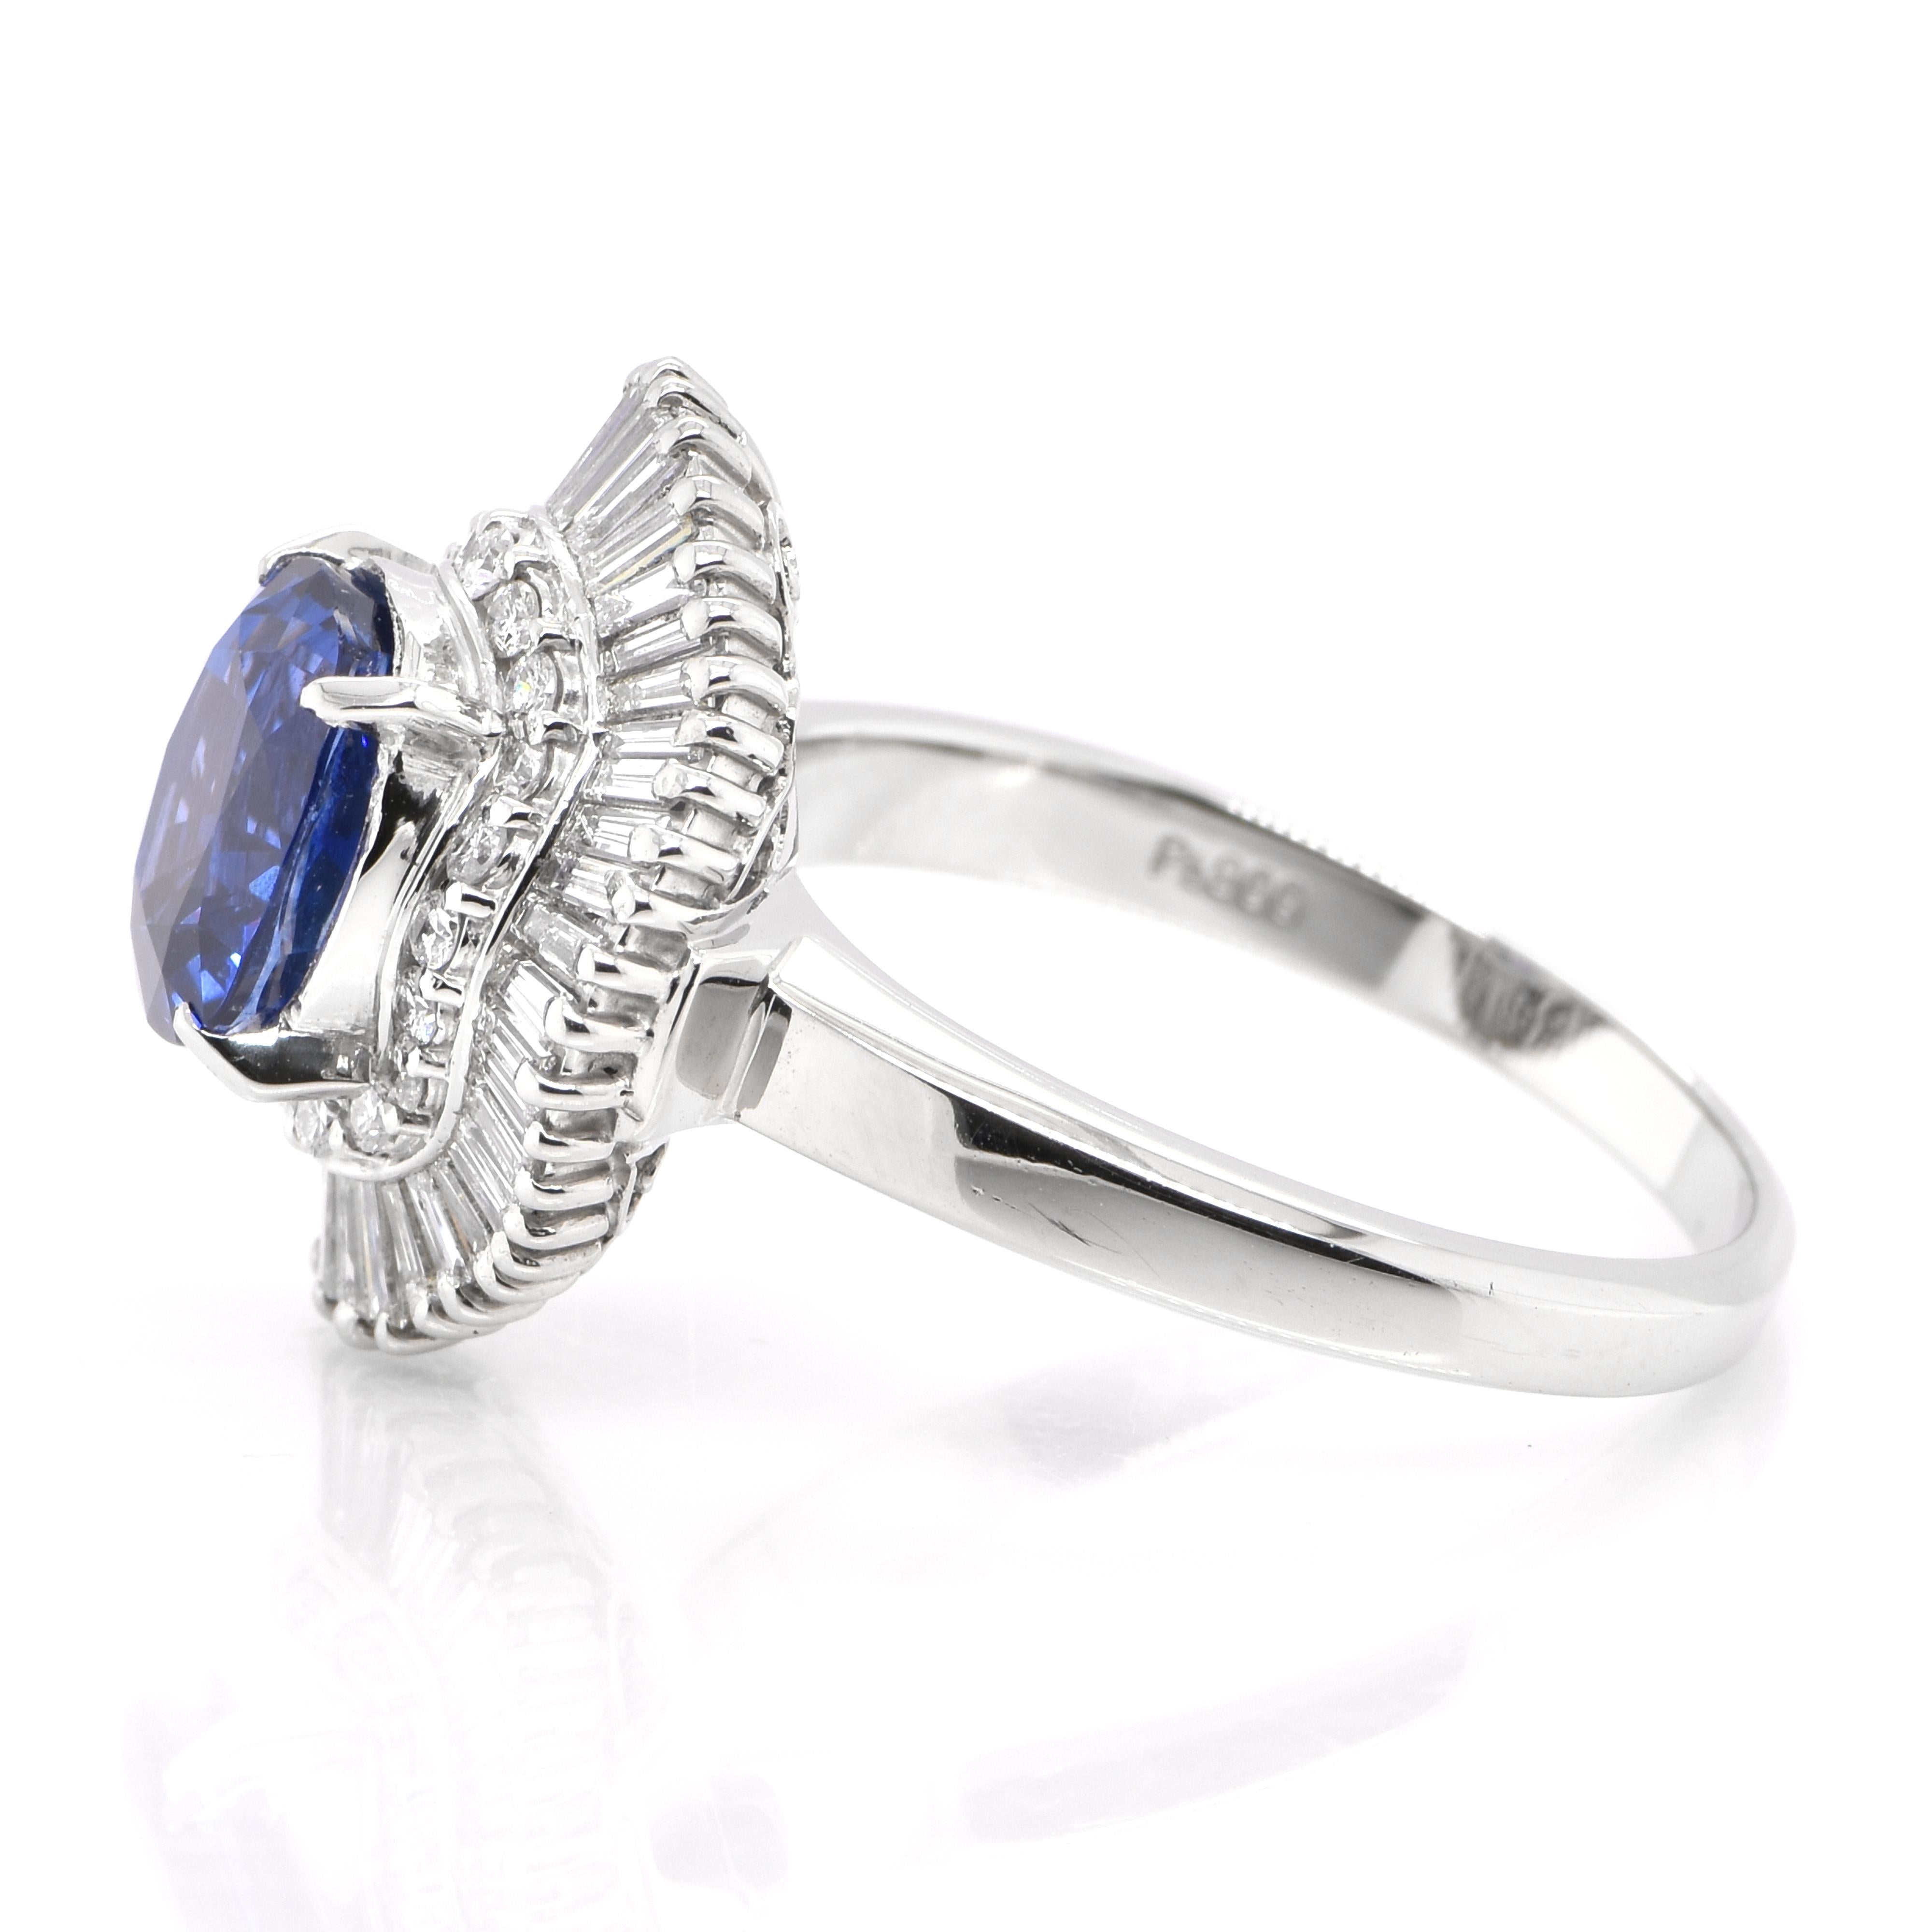 Cushion Cut 3.04 Carat Natural Blue Sapphire and Diamond Ballerina Ring Set in Platinum